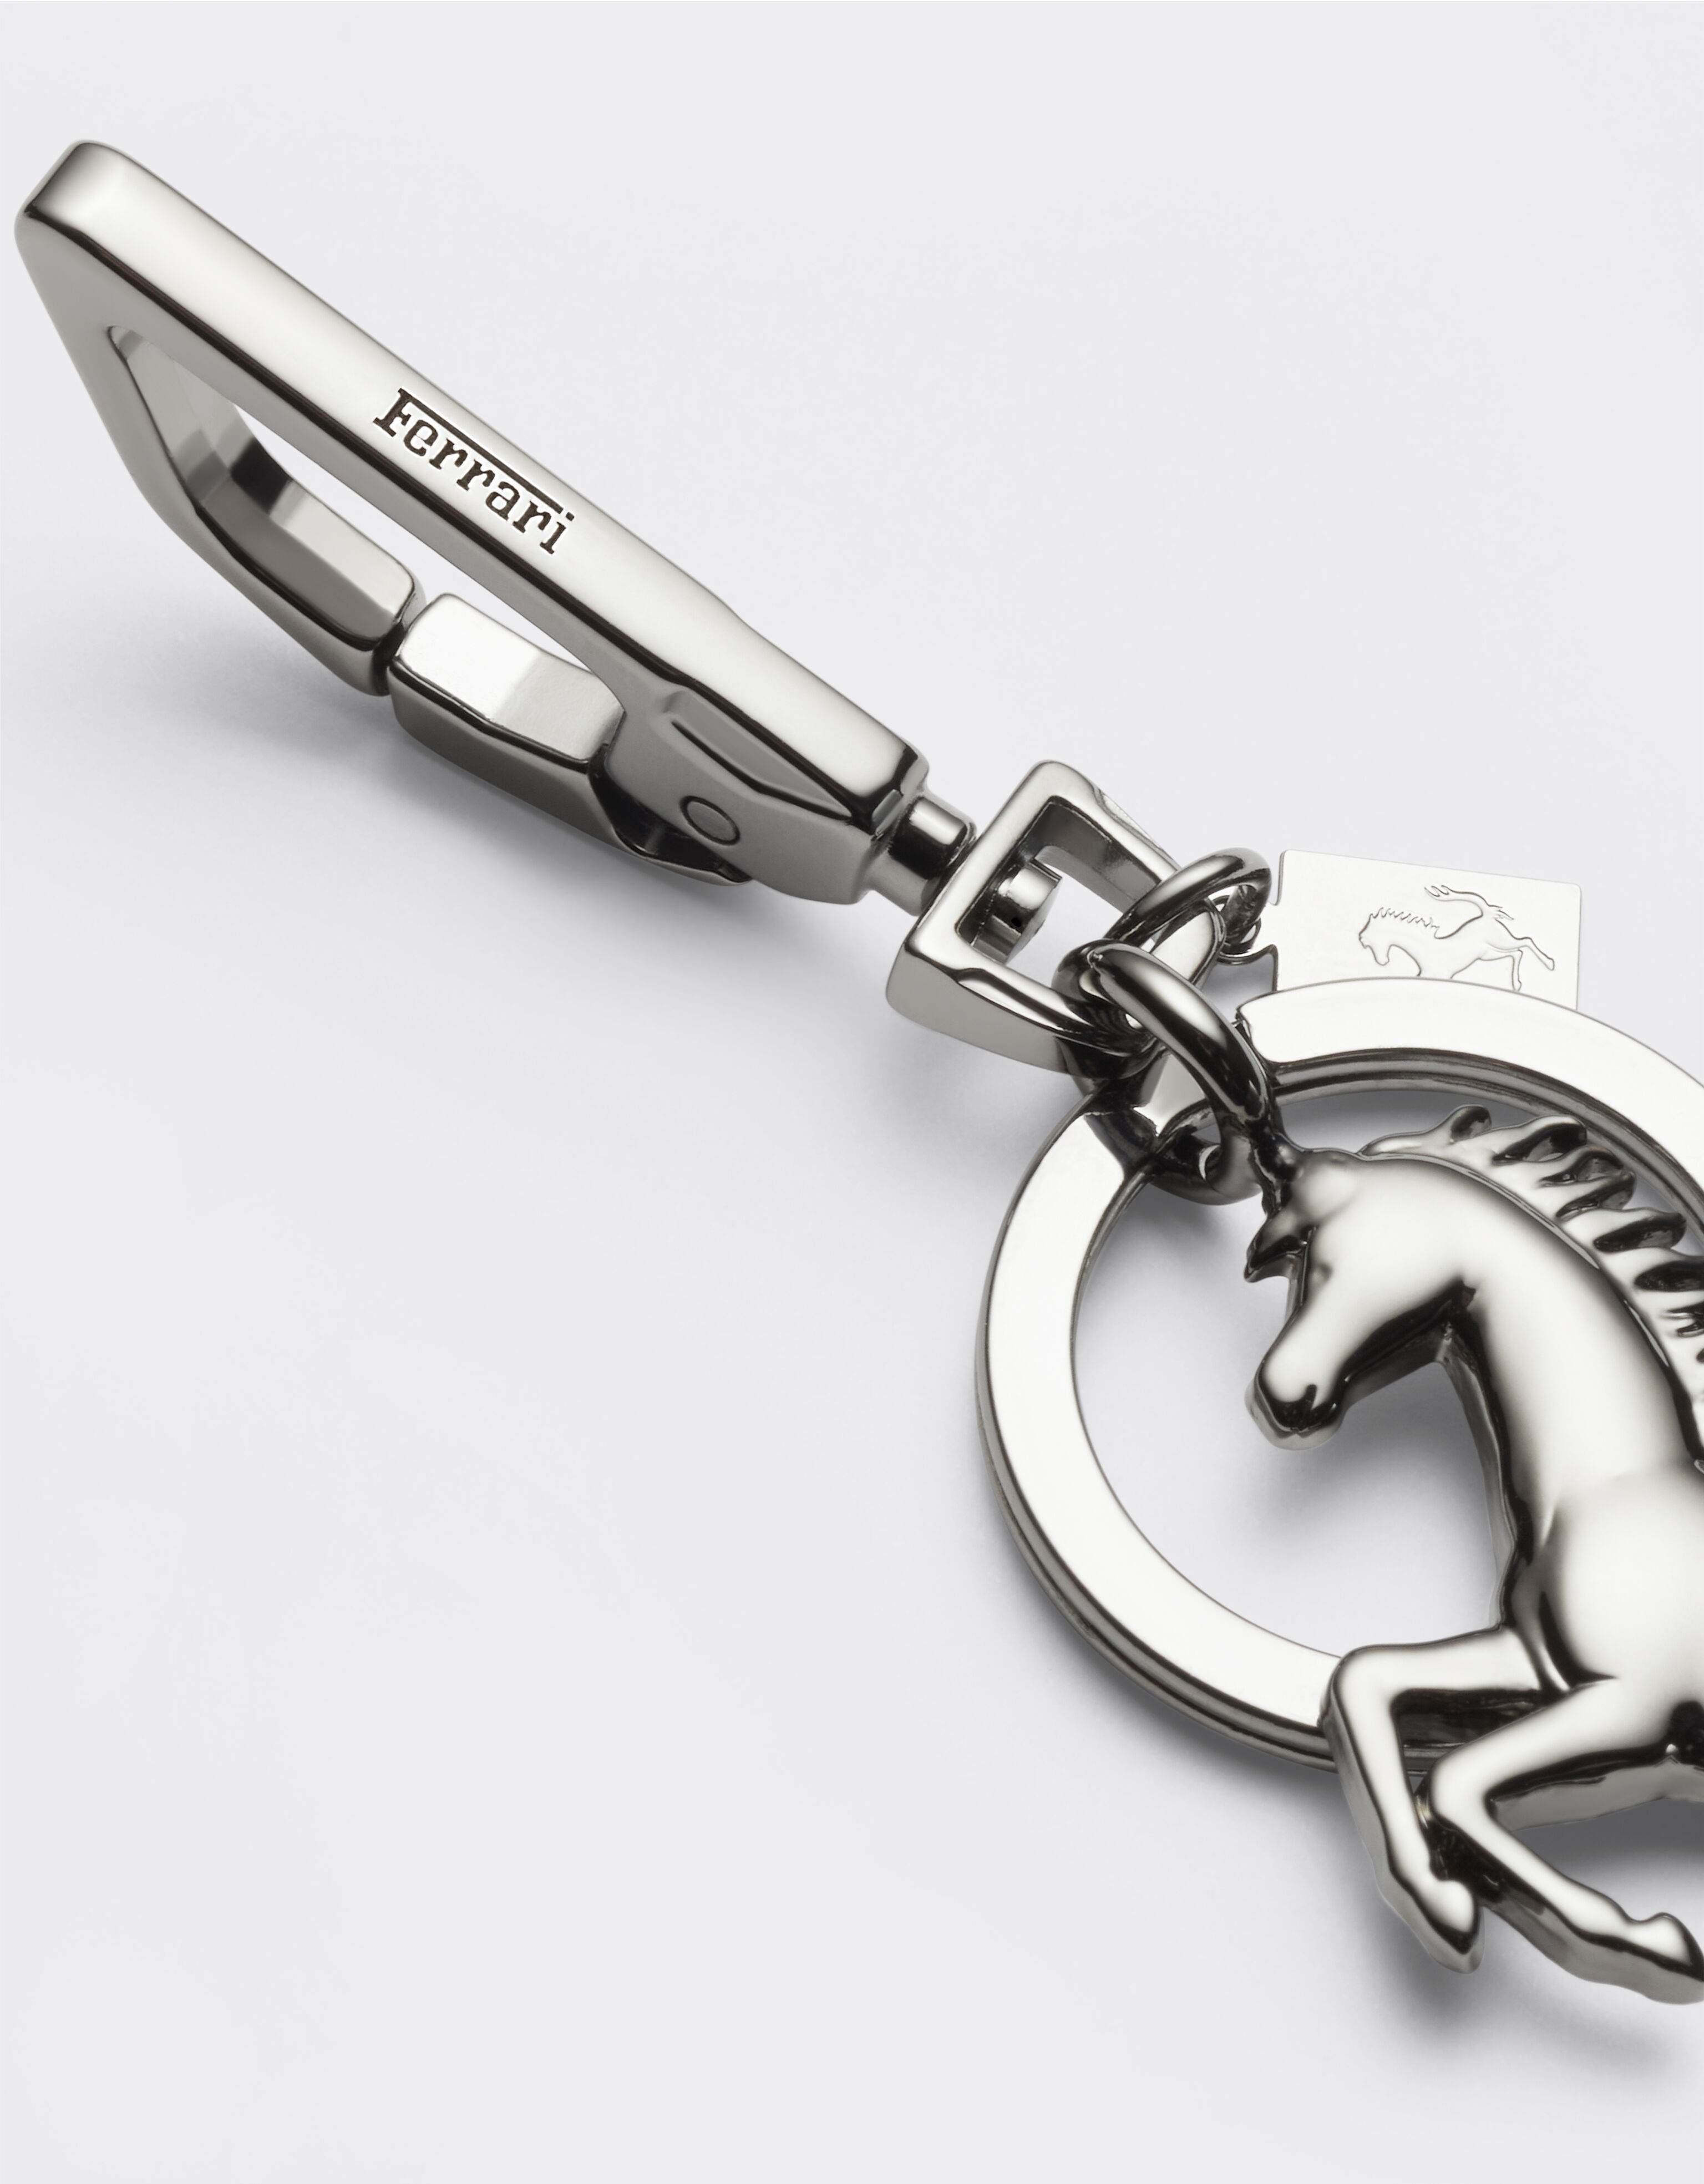 Ferrari Prancing Horse keychain and charm 木炭色 20057f